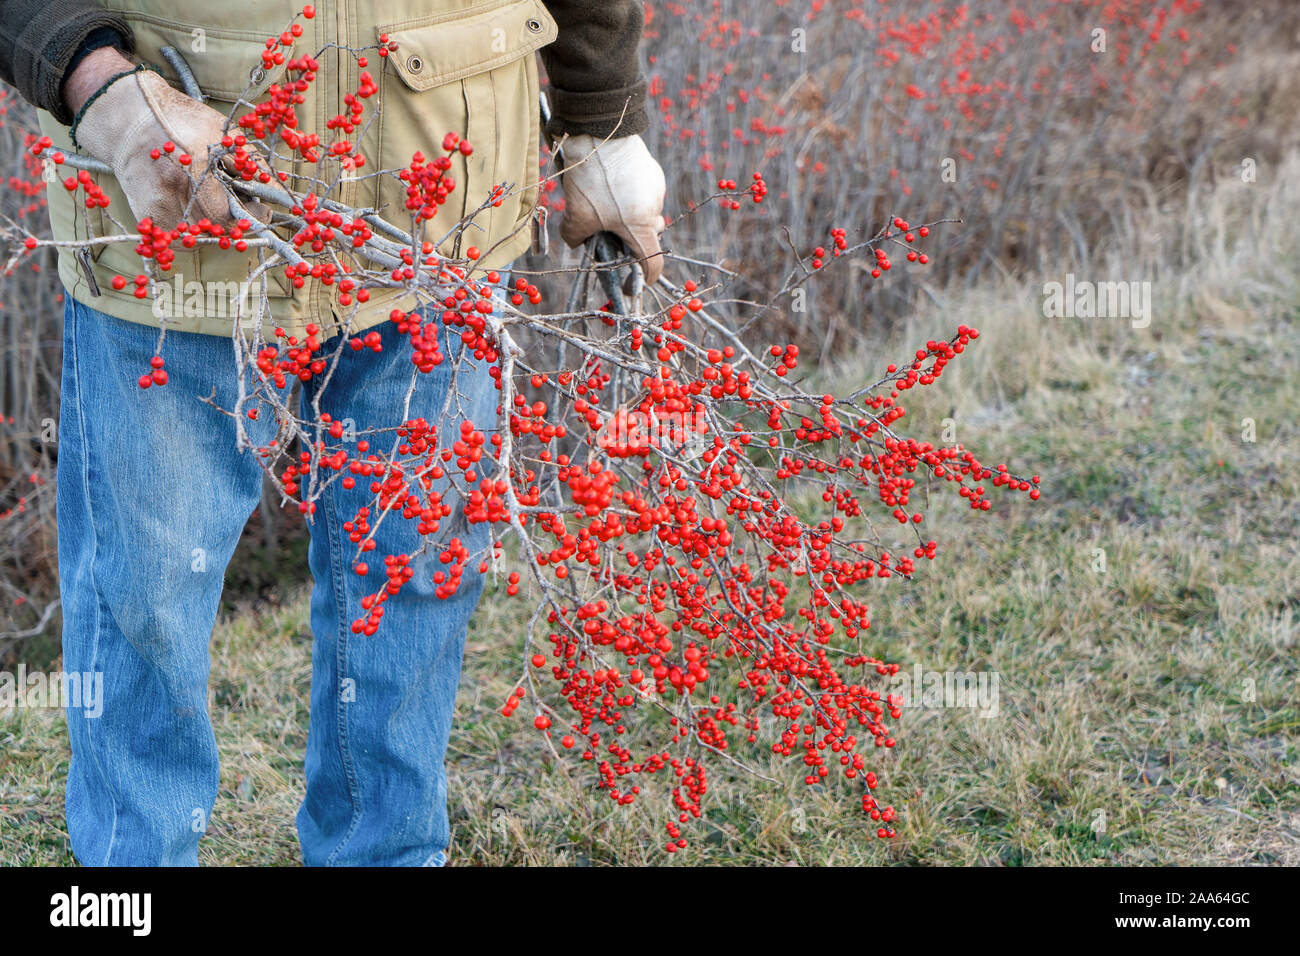 A man harvesting wild growing winter berries. Stock Photo